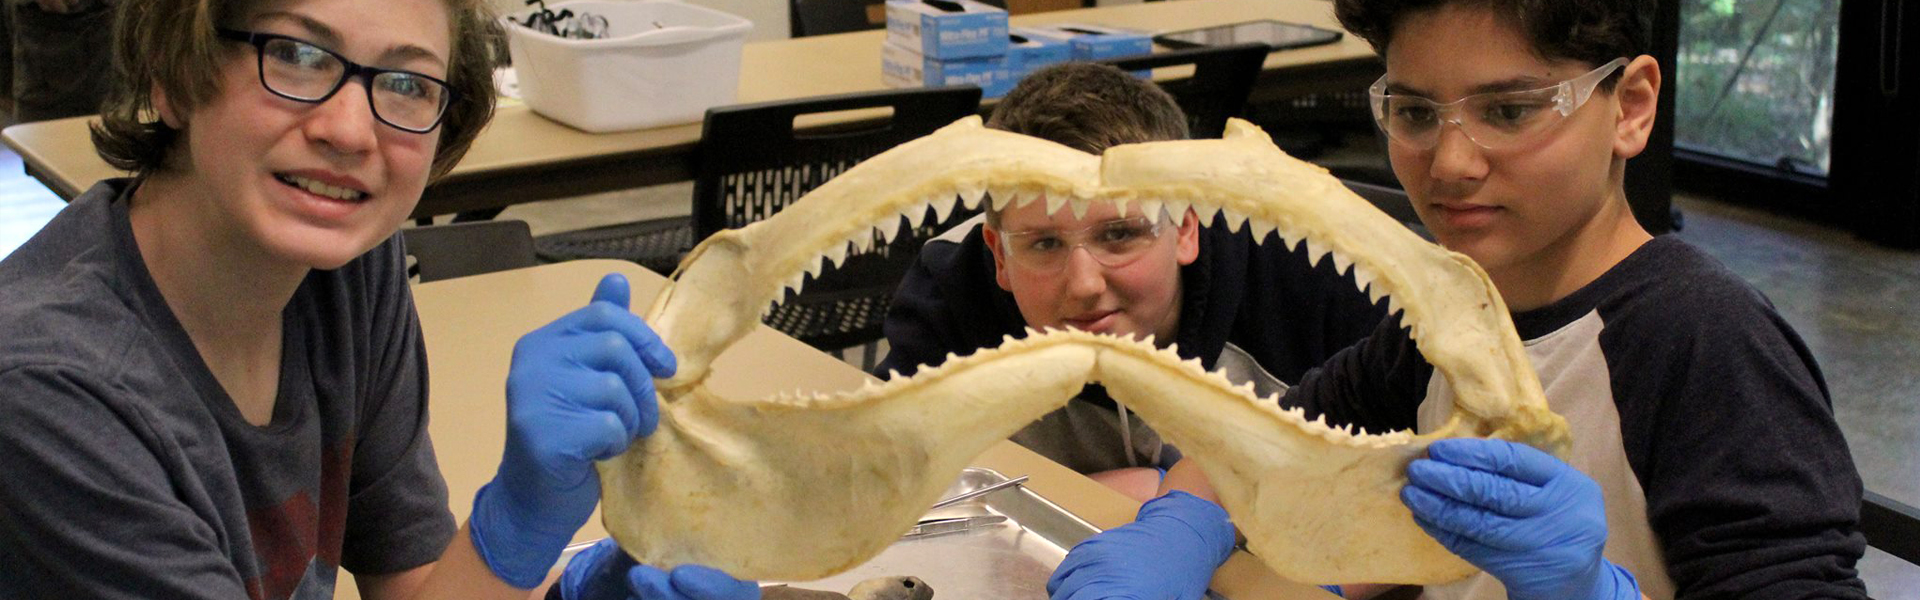 shark teeth kids in class